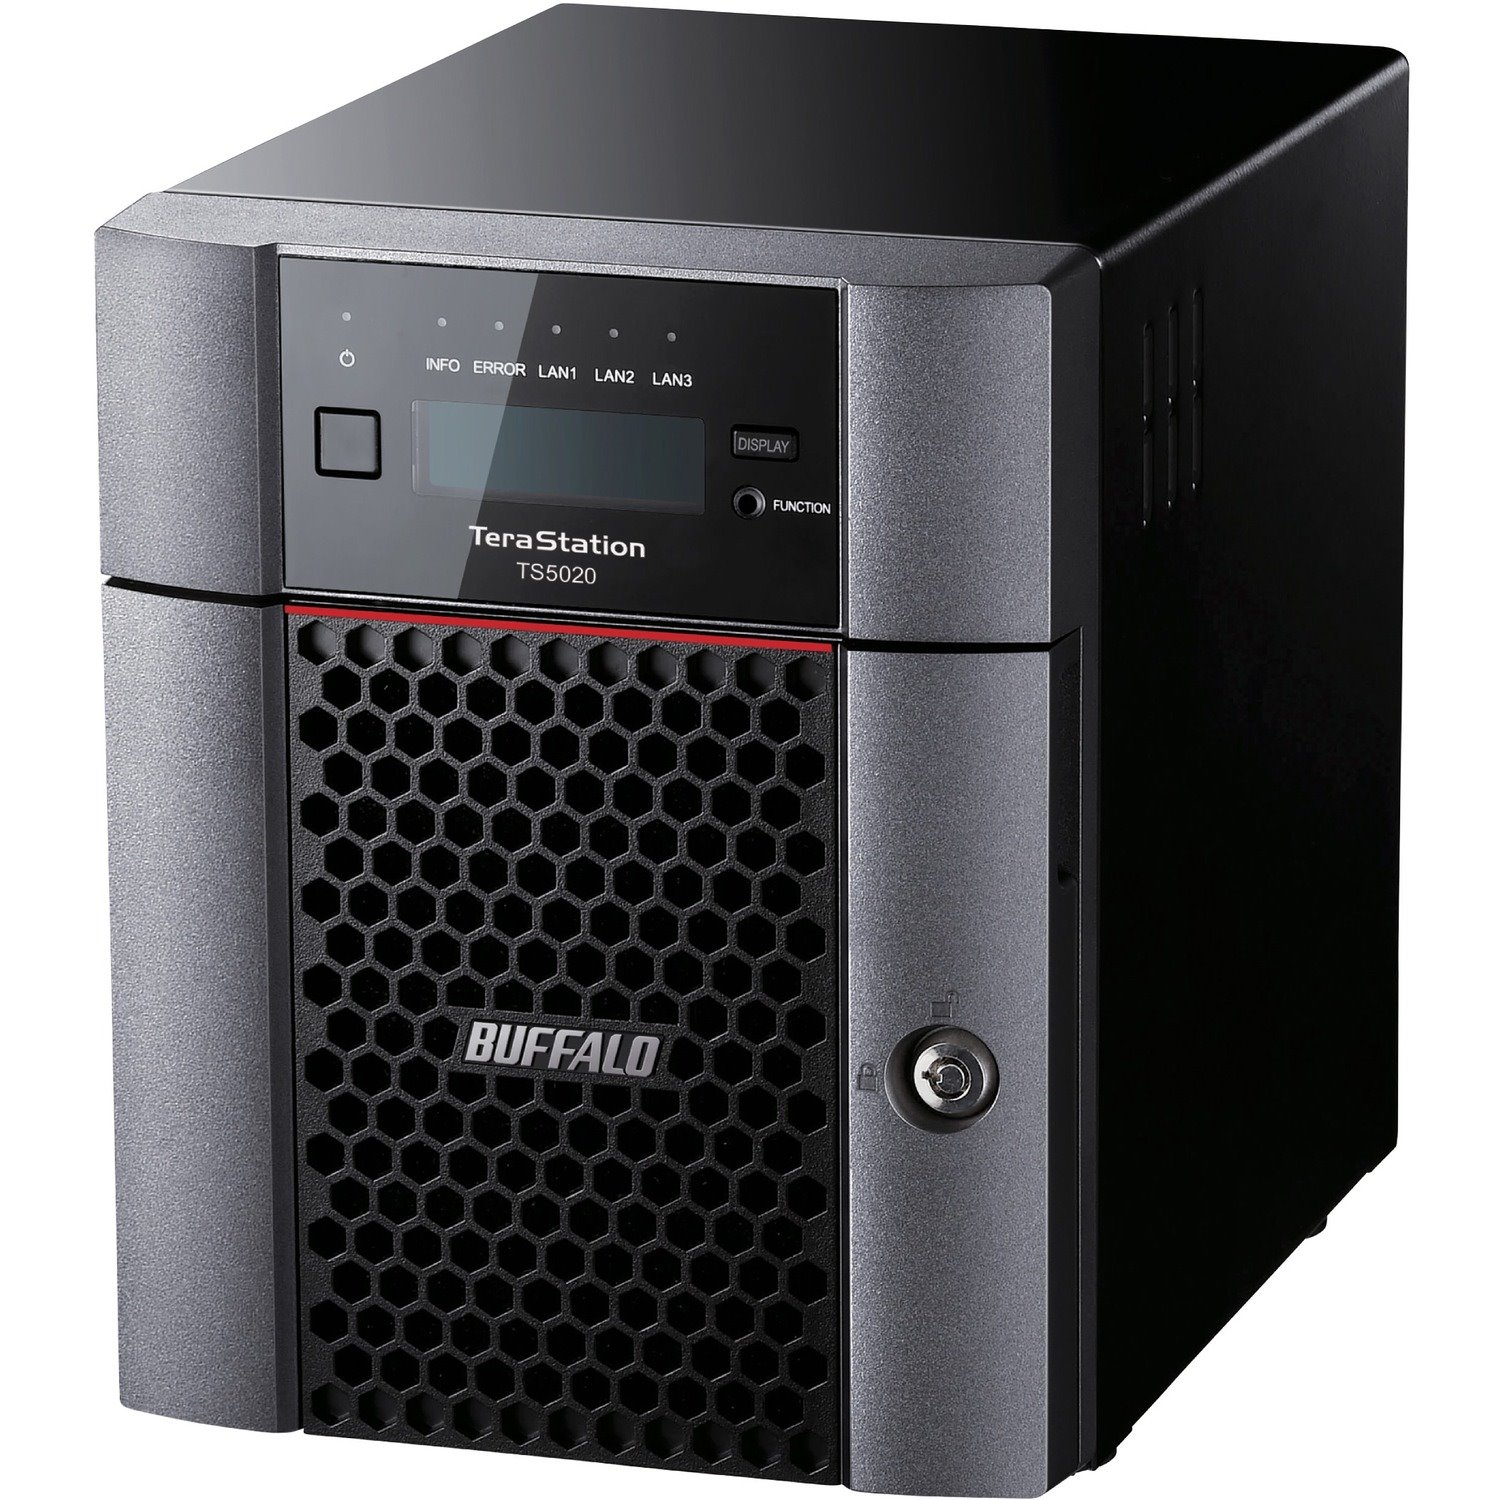 BUFFALO TeraStation 5420 4-Bay 80TB (4x20TB) Business Desktop NAS Storage Hard Drives Included